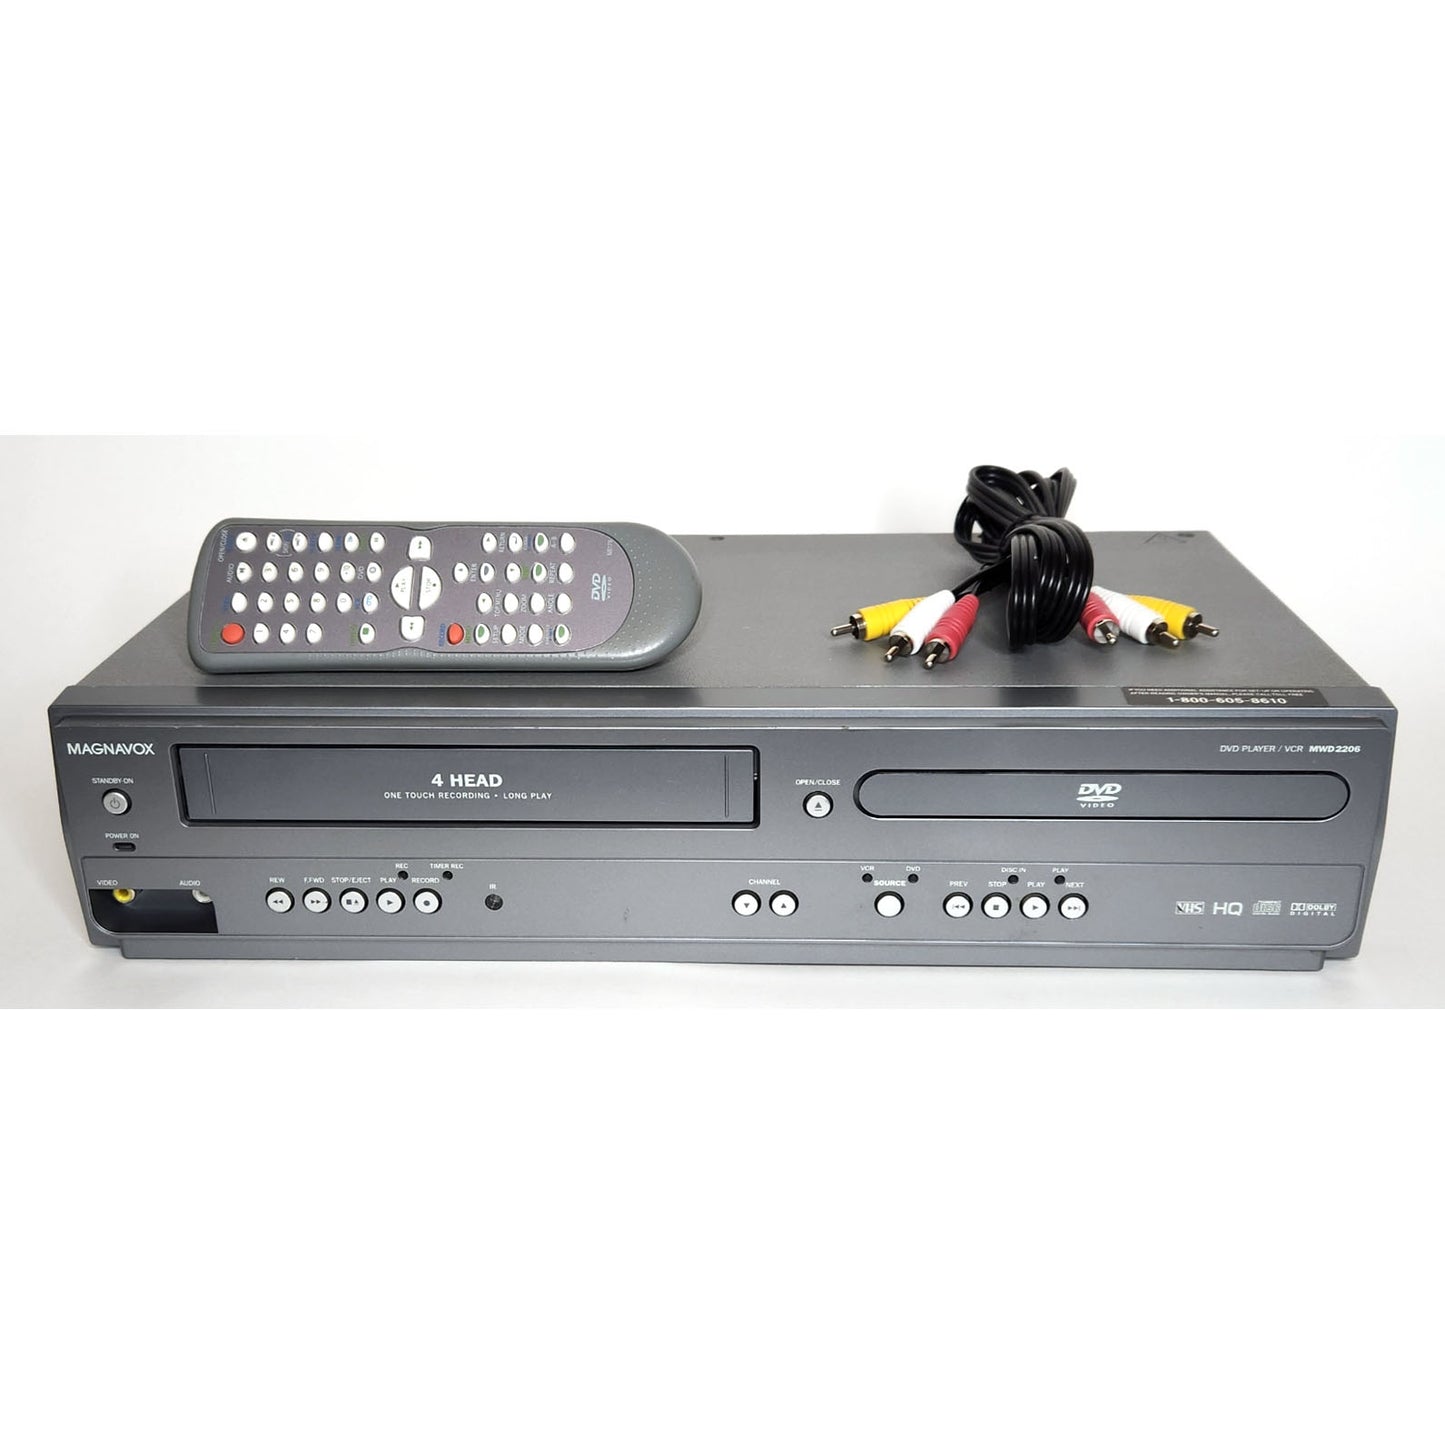 Magnavox MWD2206 VCR/DVD Player Combo